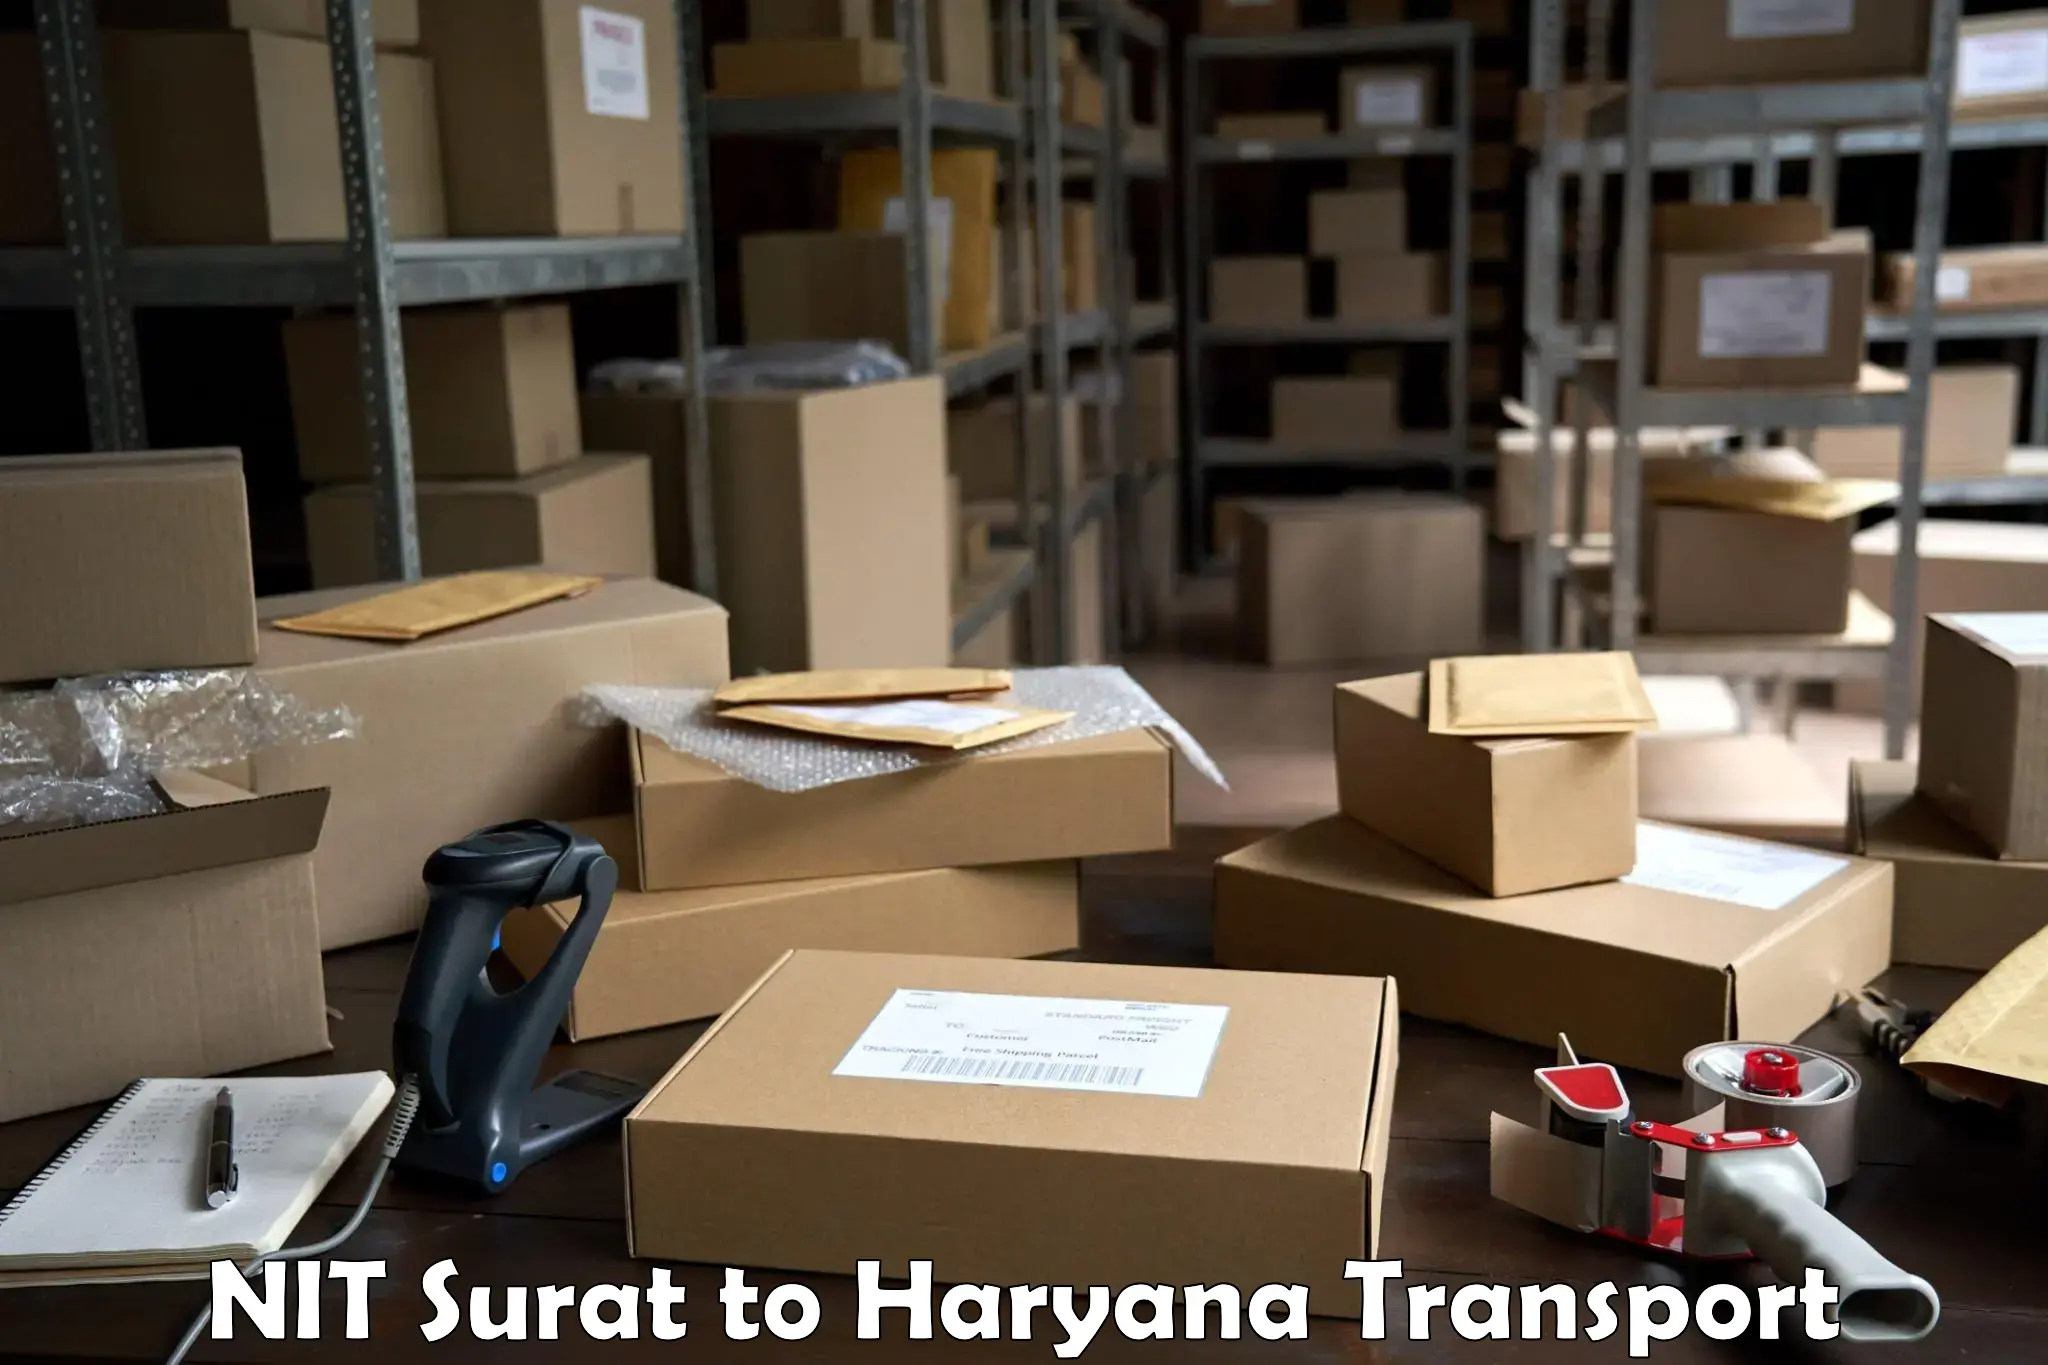 Bike shipping service NIT Surat to Gurgaon